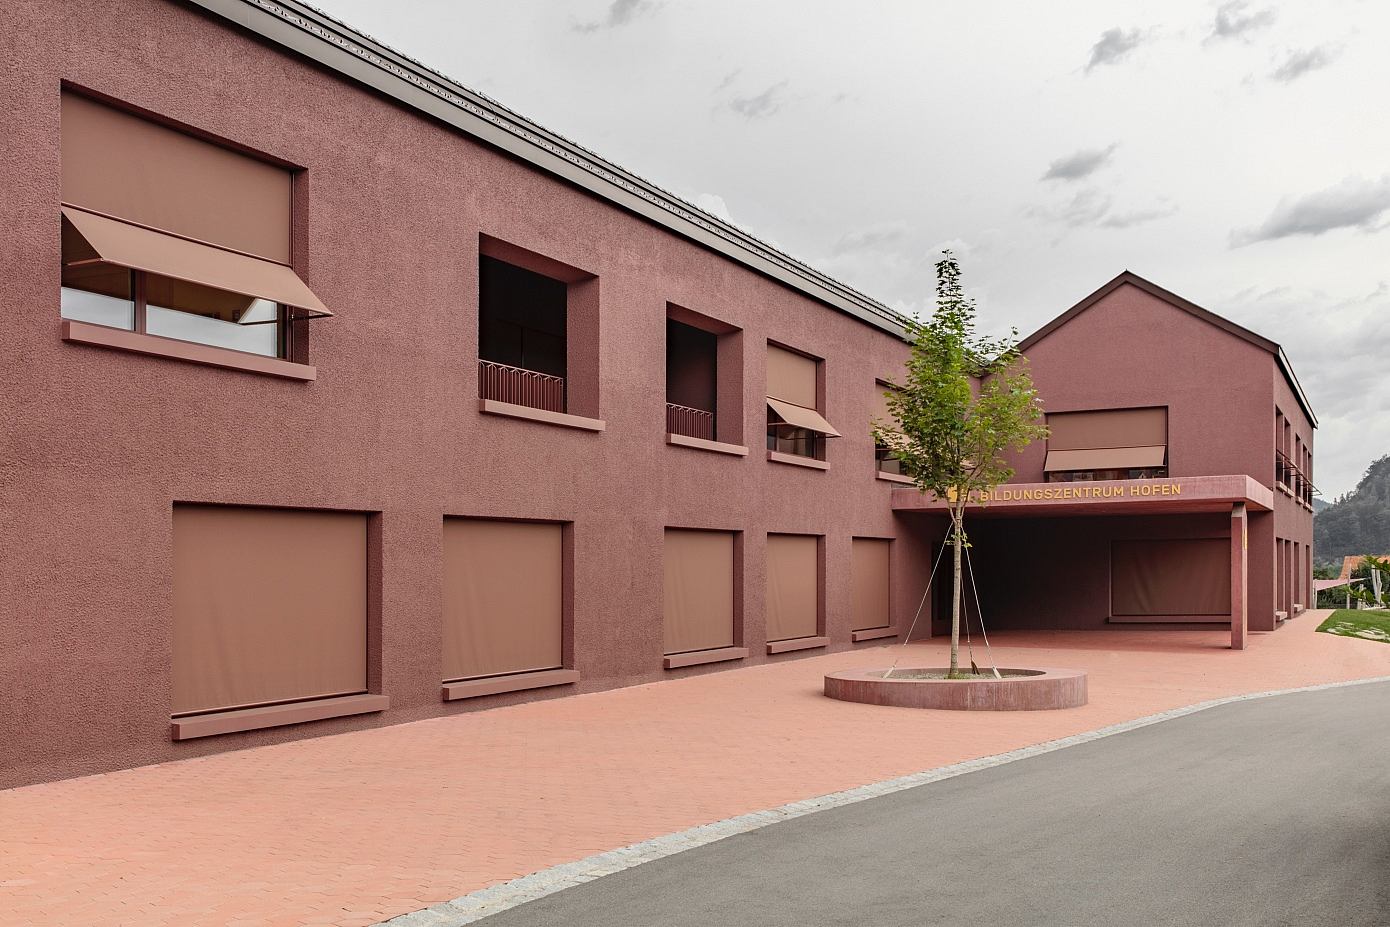 Frastanz-Hofen Education Centre by Pedevilla Architects